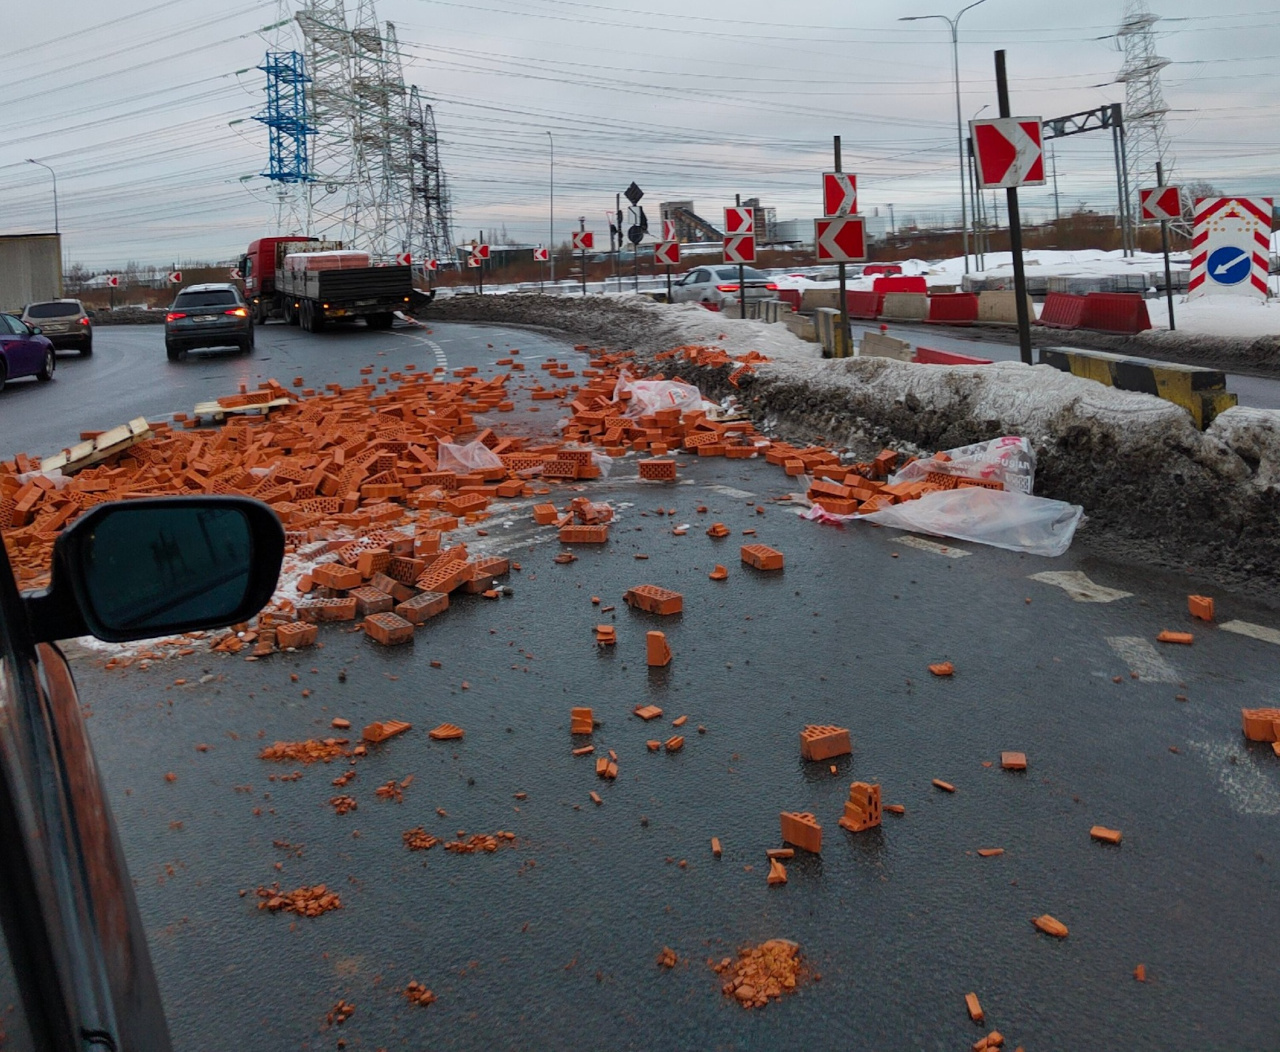 ДТП в оранжевых тонах: грузовик навалил кирпичей на кольце при въезде в Колпино